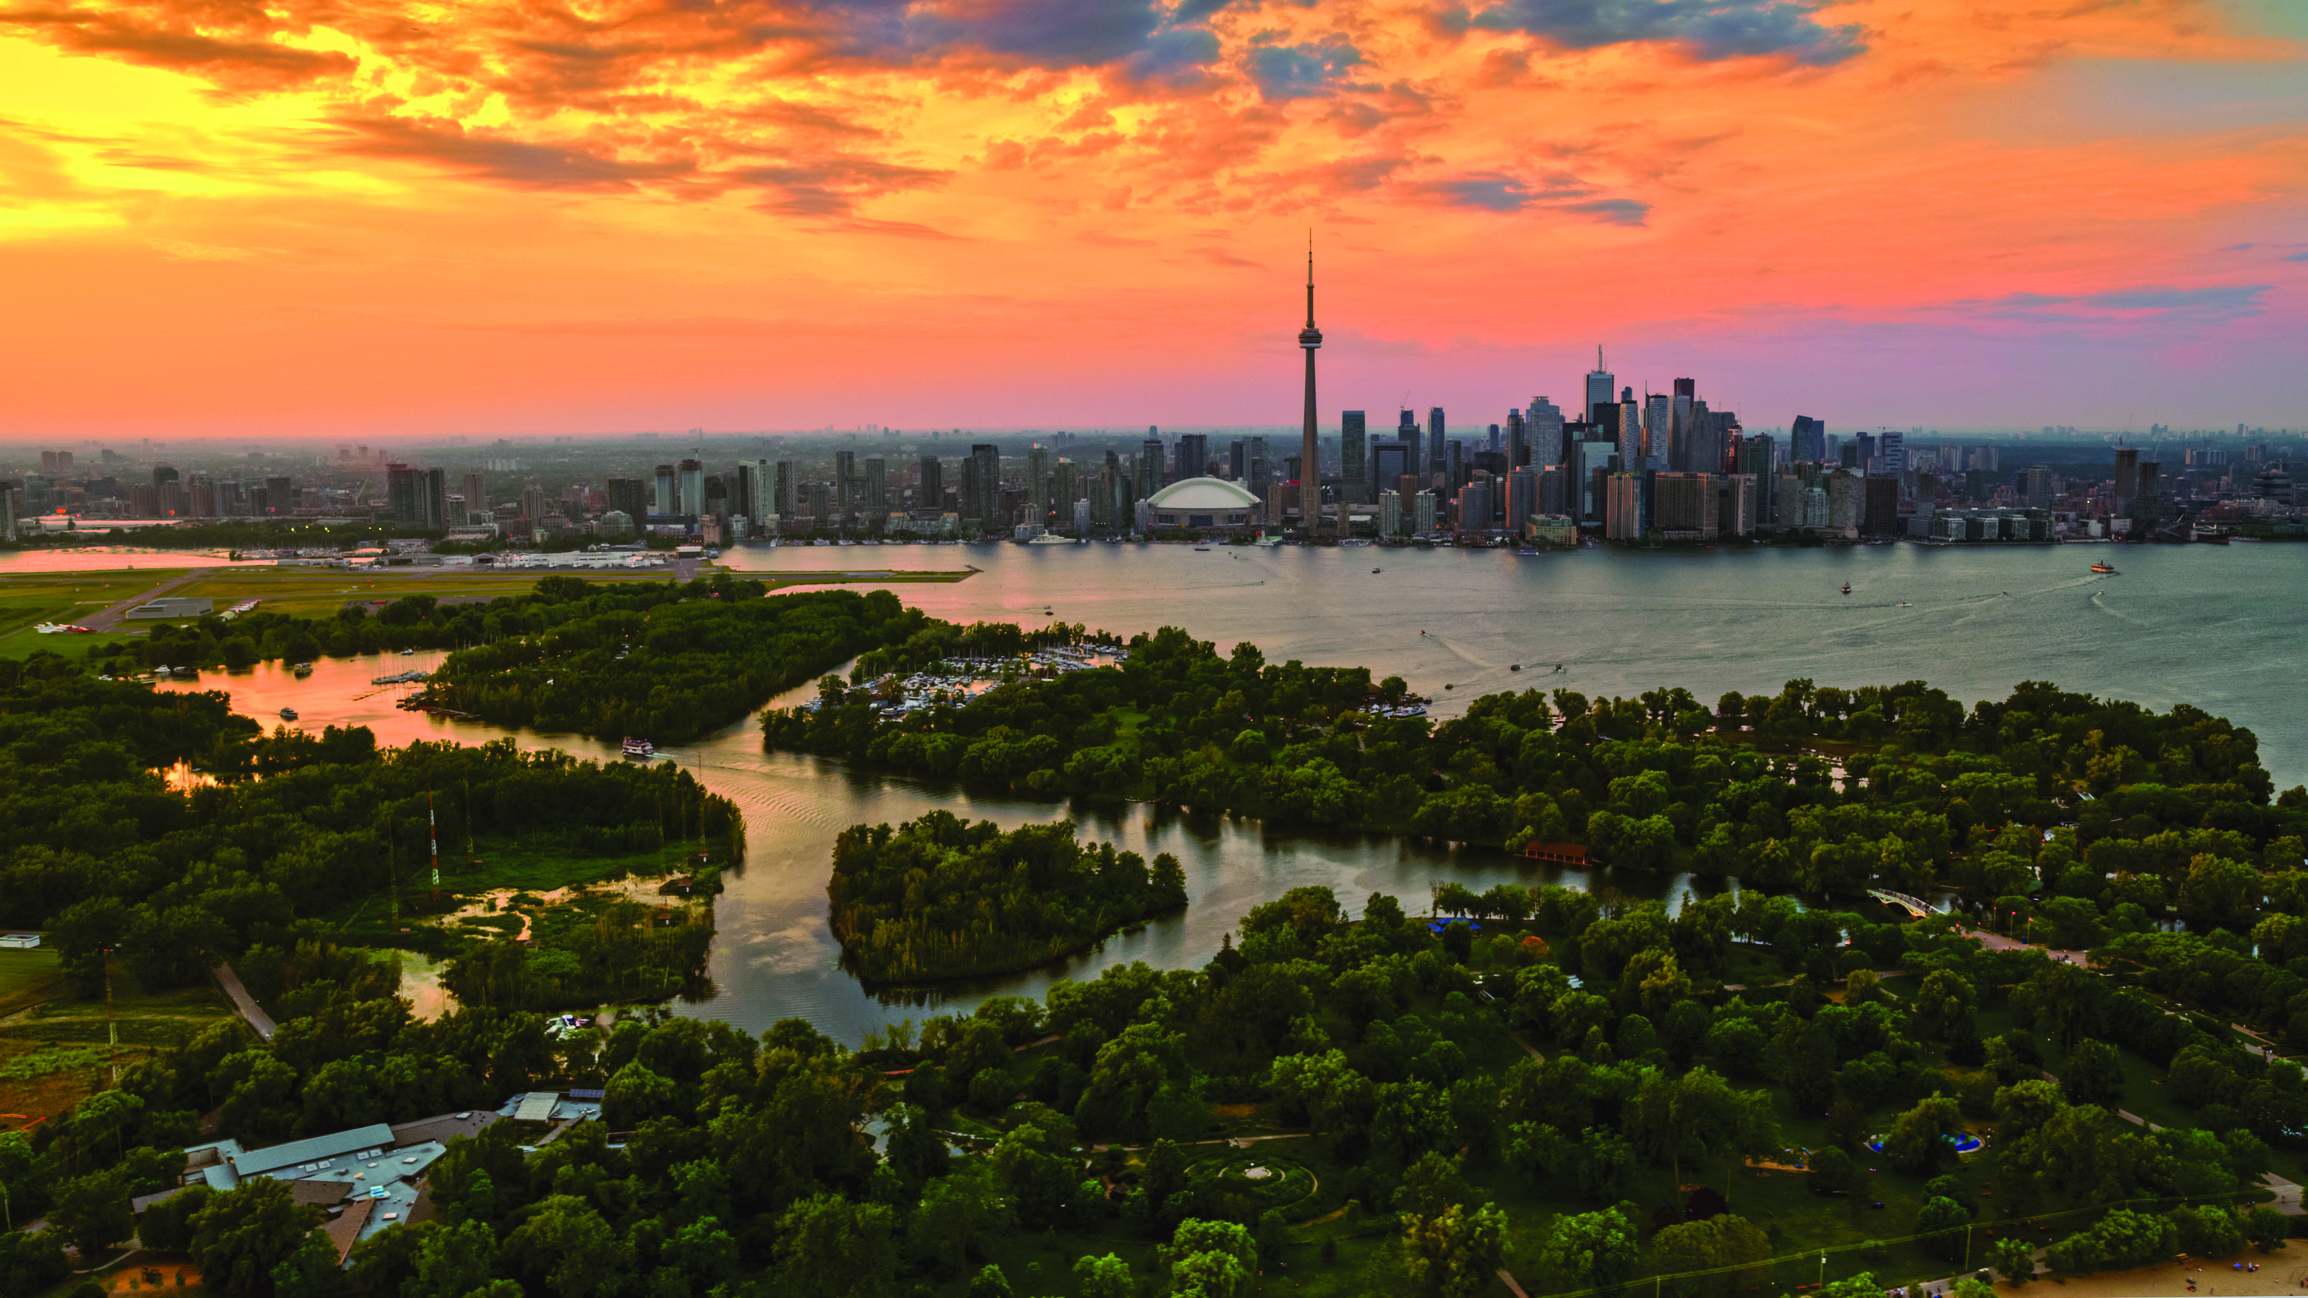 A sun setting on Toronto's waterfront.